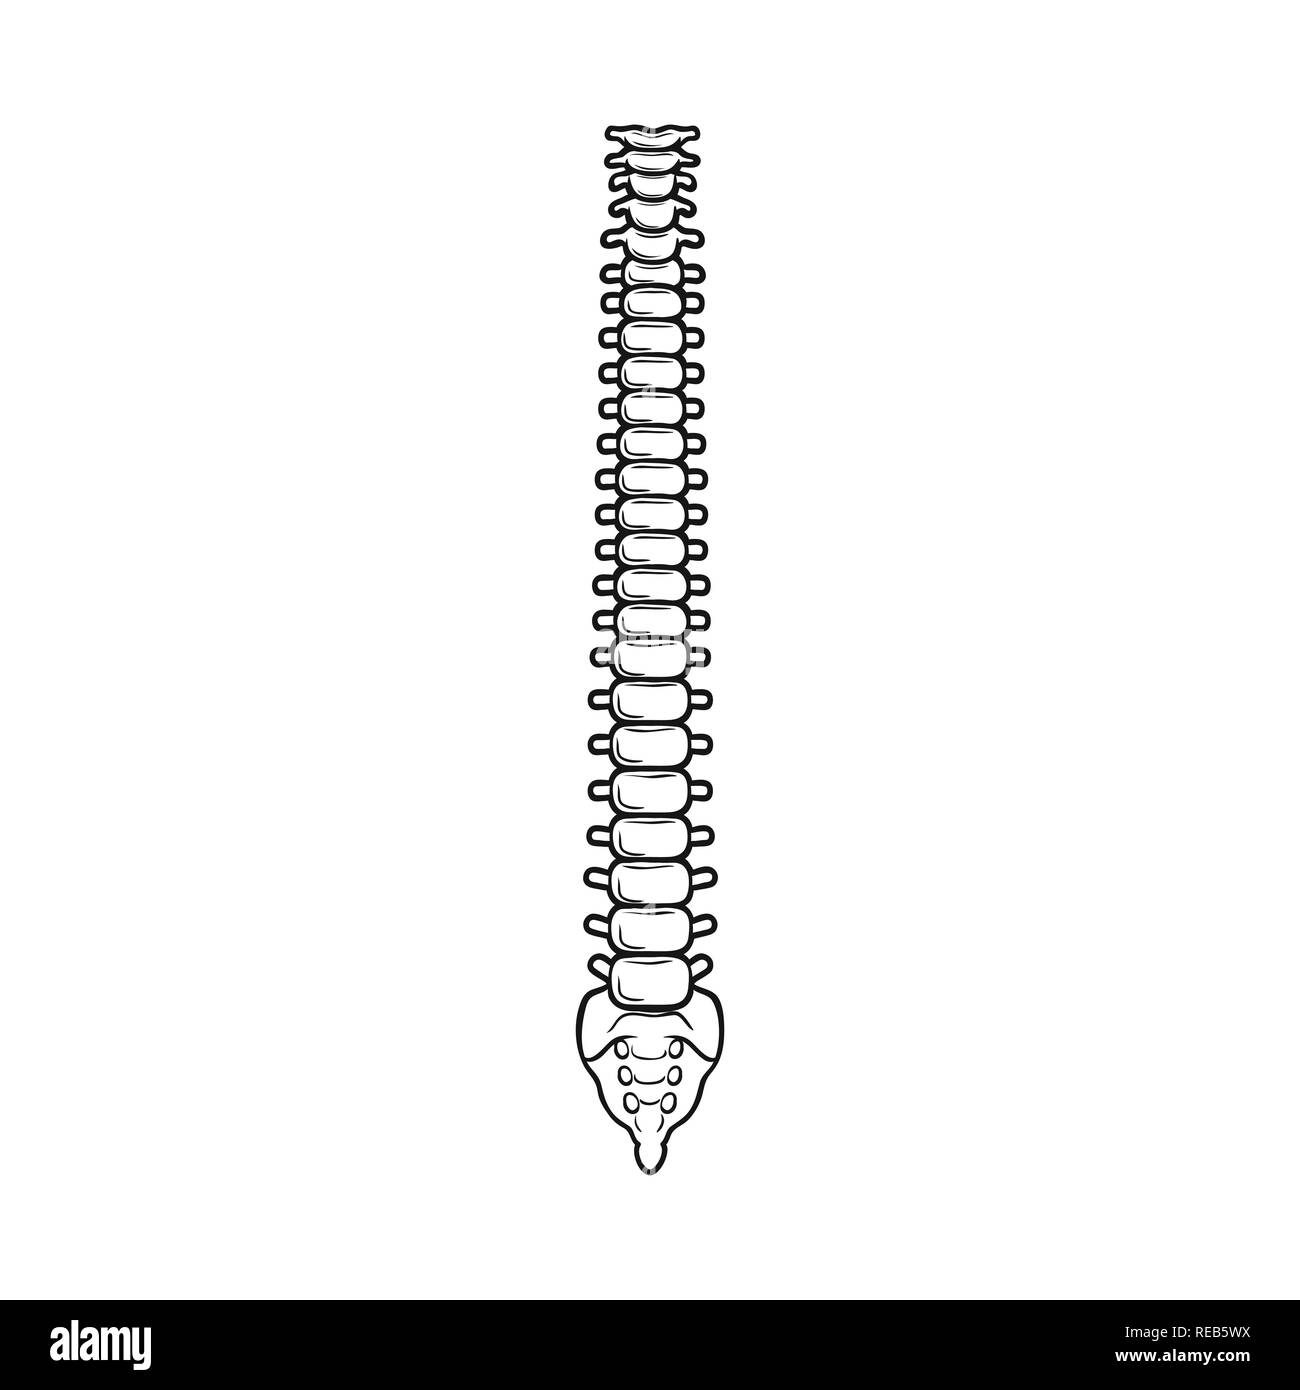 Spine bones anatomy sketch backbone Royalty Free Vector